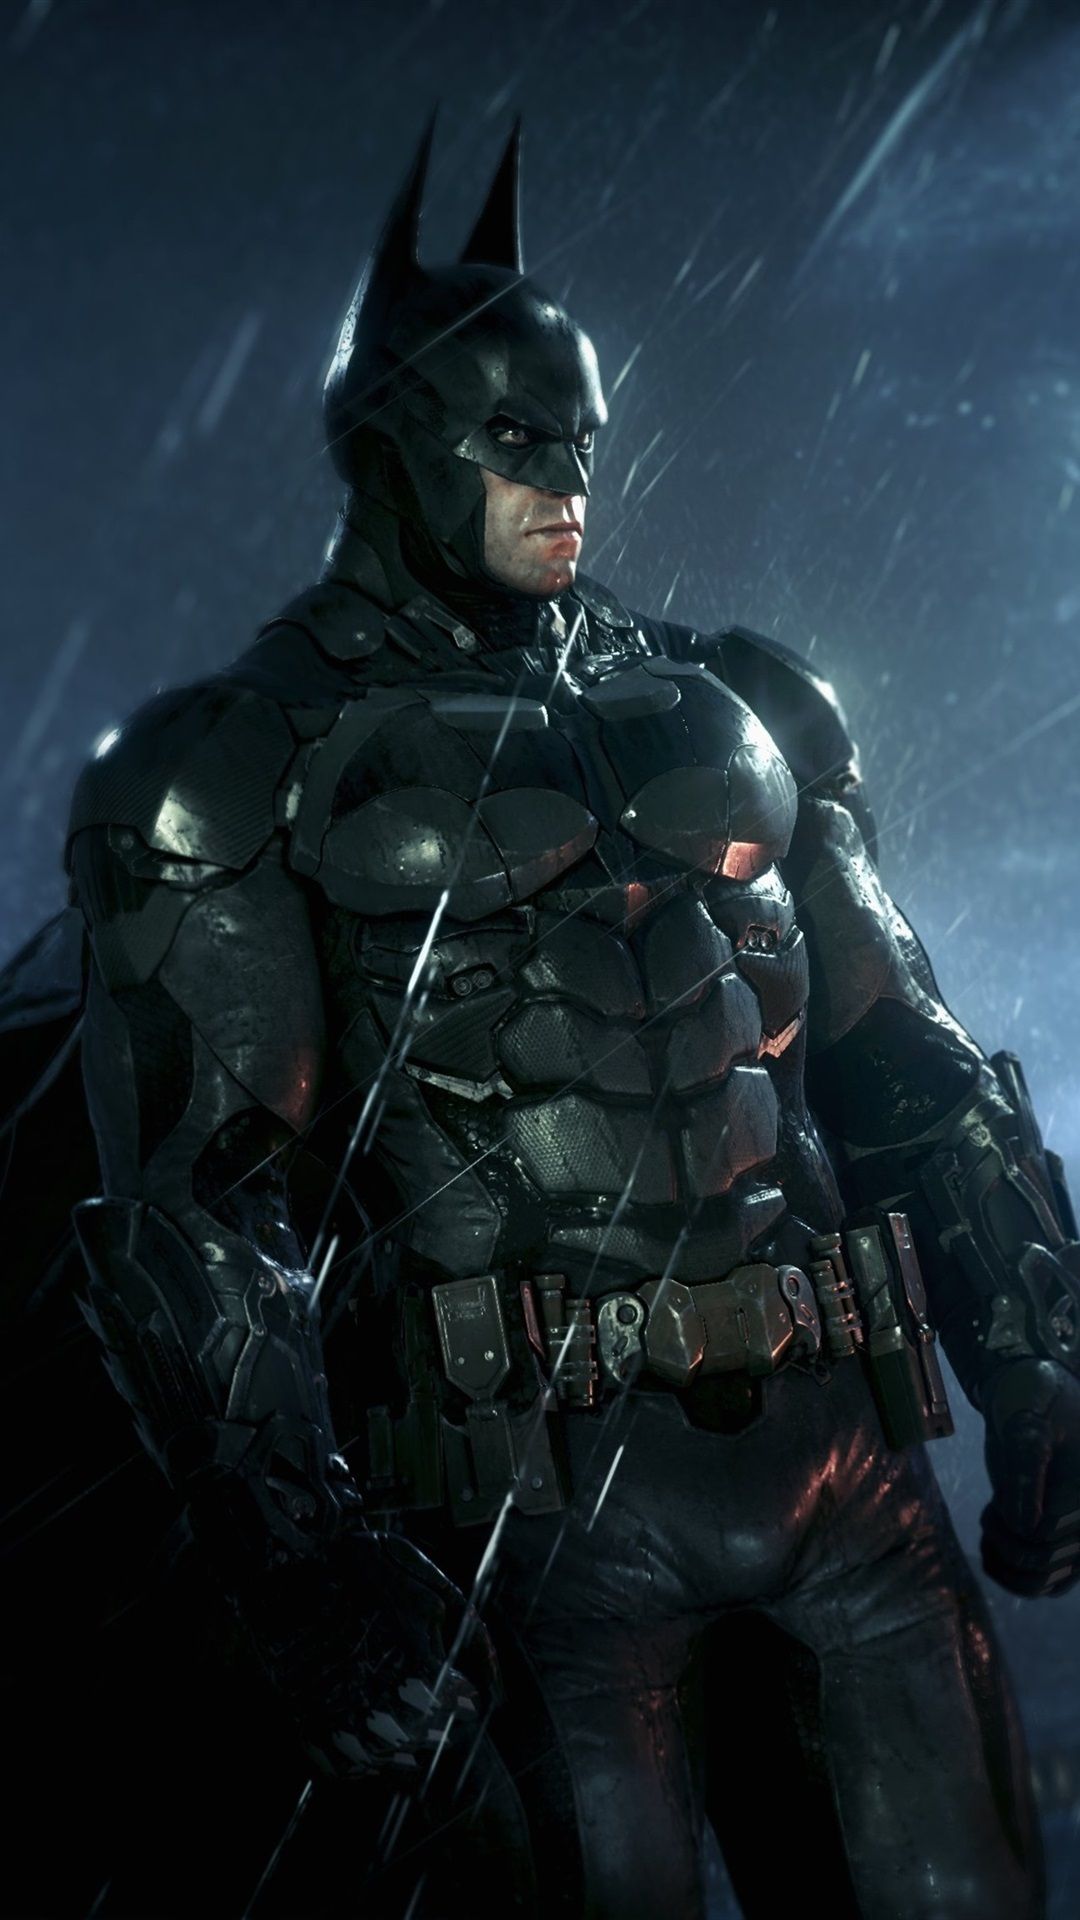 Wallpaper Batman: Arkham Knight, PS4 games, rainy night 3840x2160 UHD 4K Picture, Image